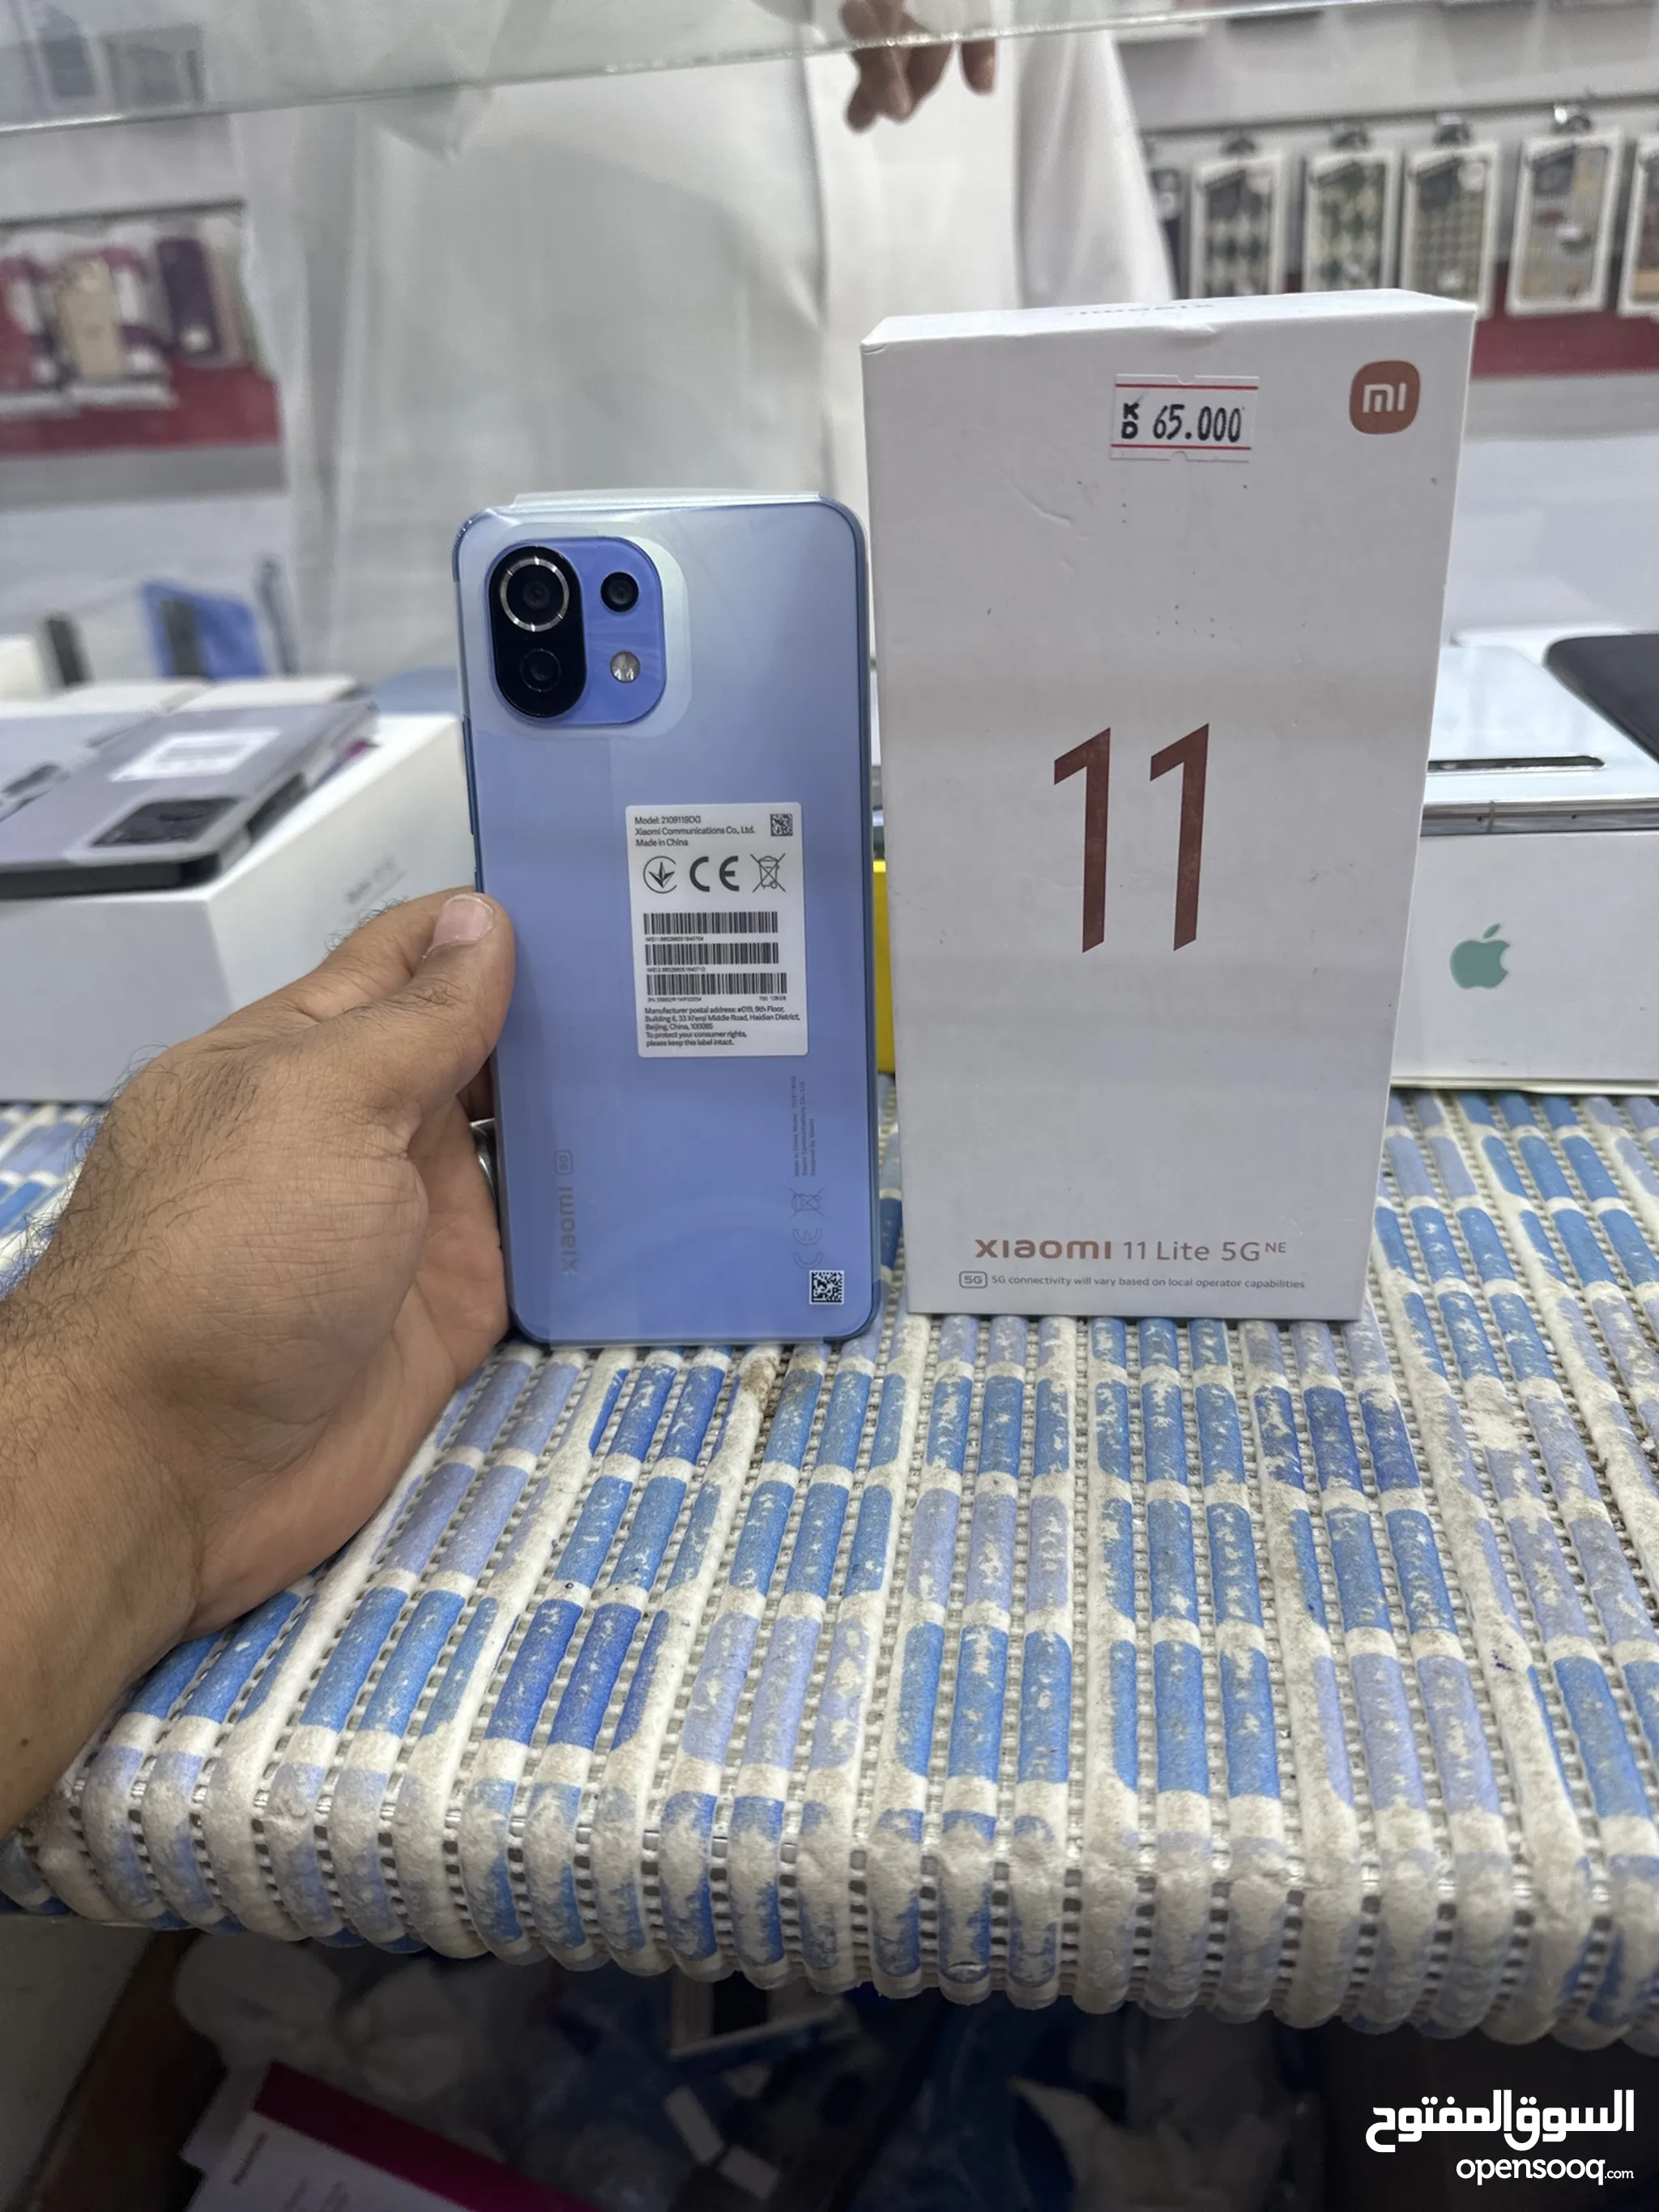 Xiaomi Mi 11 Lite 5G 128 GB Mobiles for Sale in Kuwait | OpenSooq